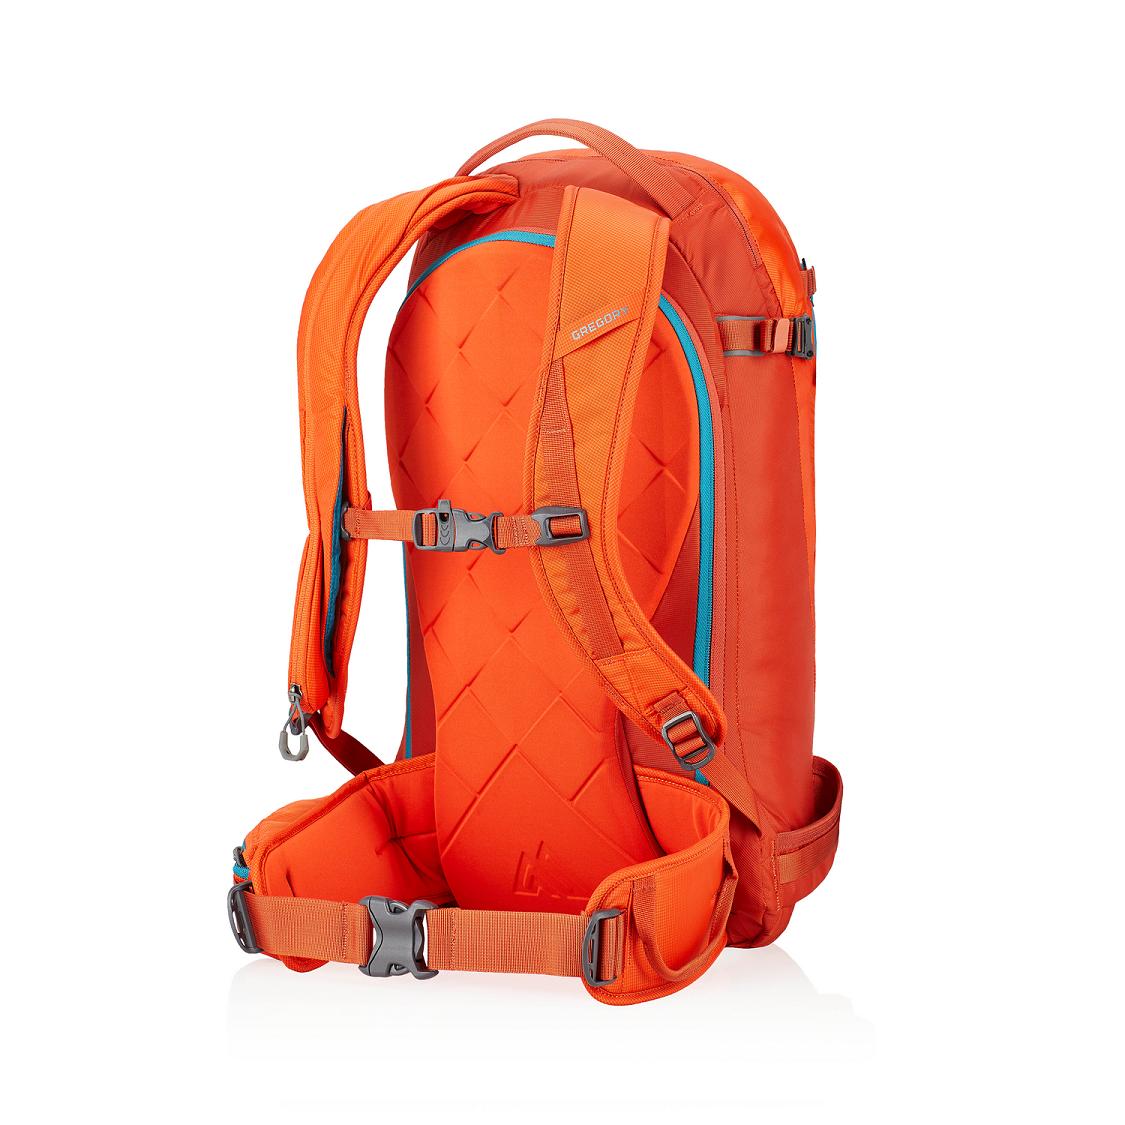 Women Gregory Targhee 26 Ski Backpacks Orange Sale Usa UALG51306